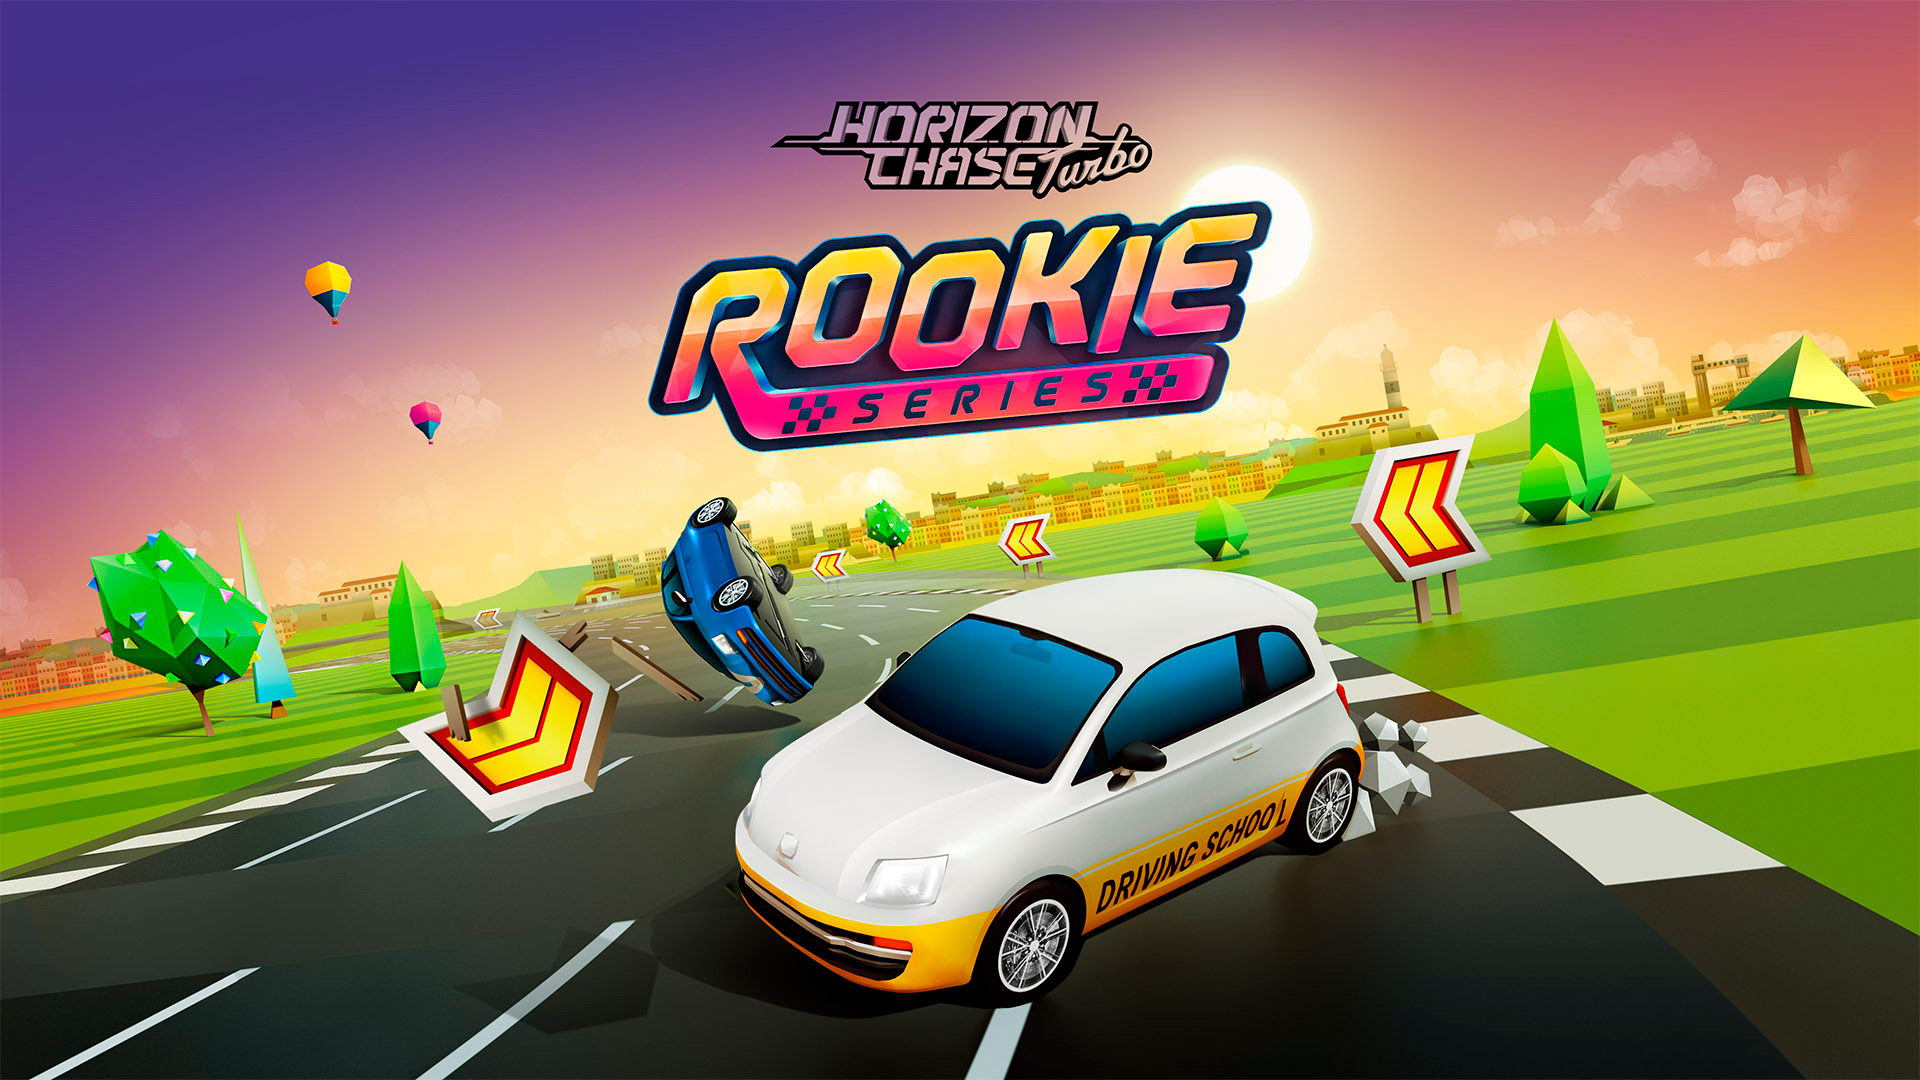 Horizon Chase Turbo - Rookie Series DLC (PHYSICAL VERSION)